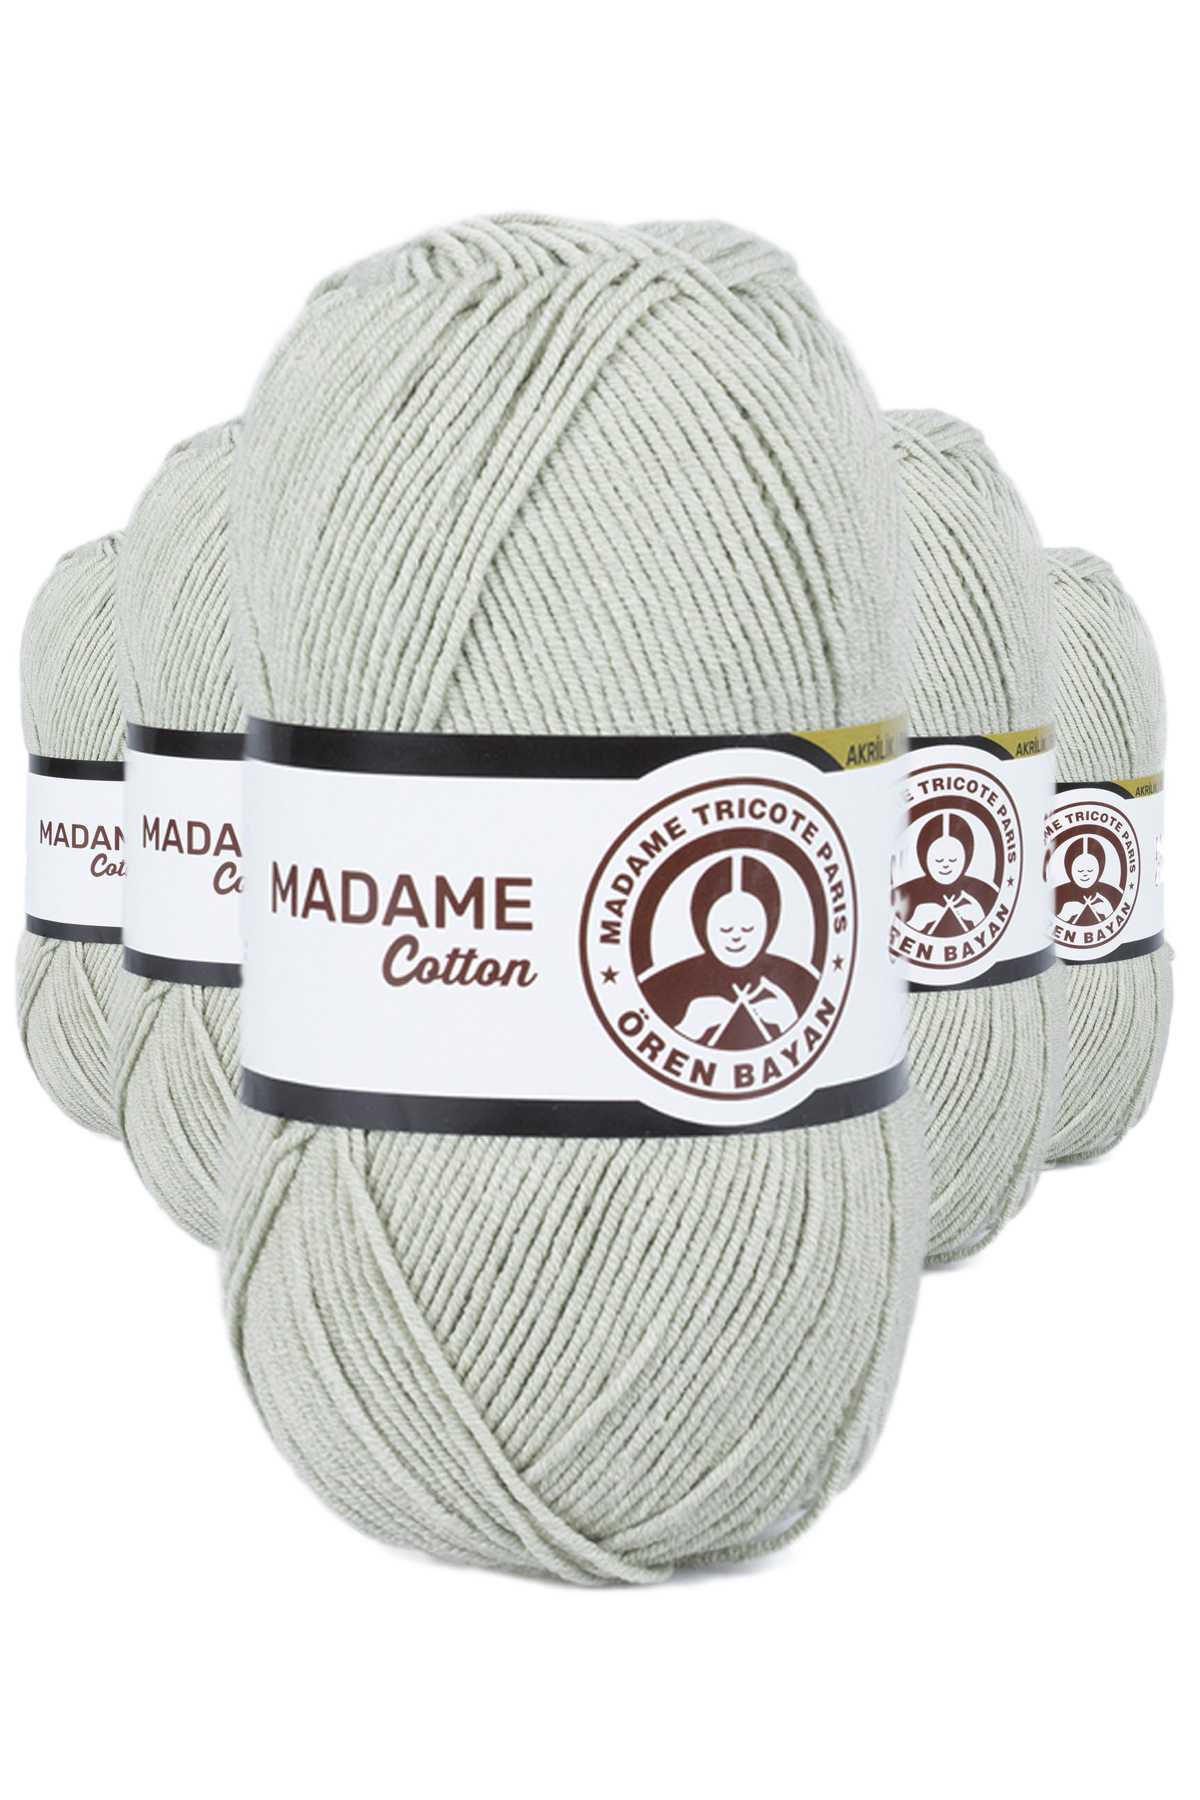 5 Adet Madame Cotton El Örgü İpi Yünü 100 gr 020 Açık Yeşil